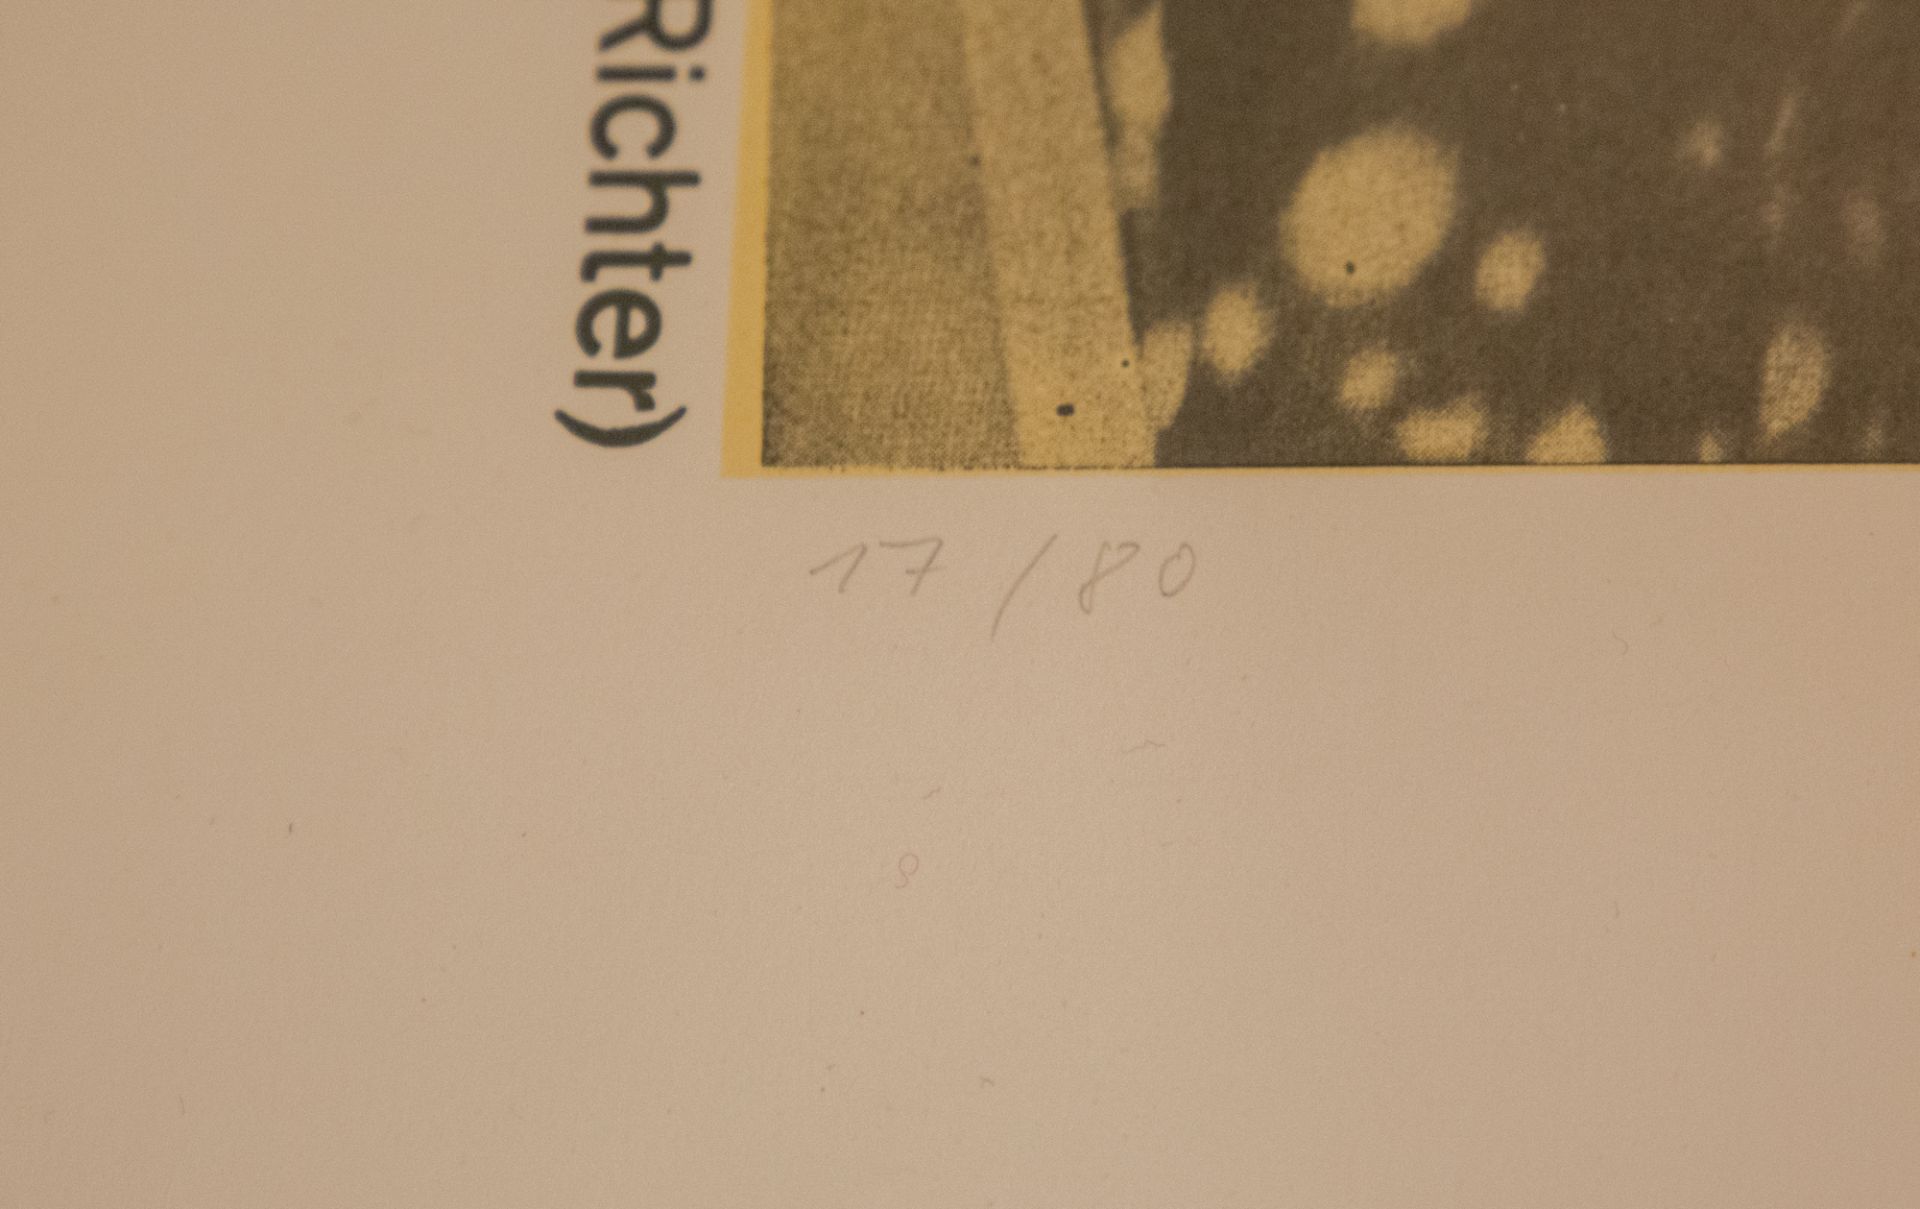 Gerhard Richter (* Dresden 1932) - Image 2 of 4